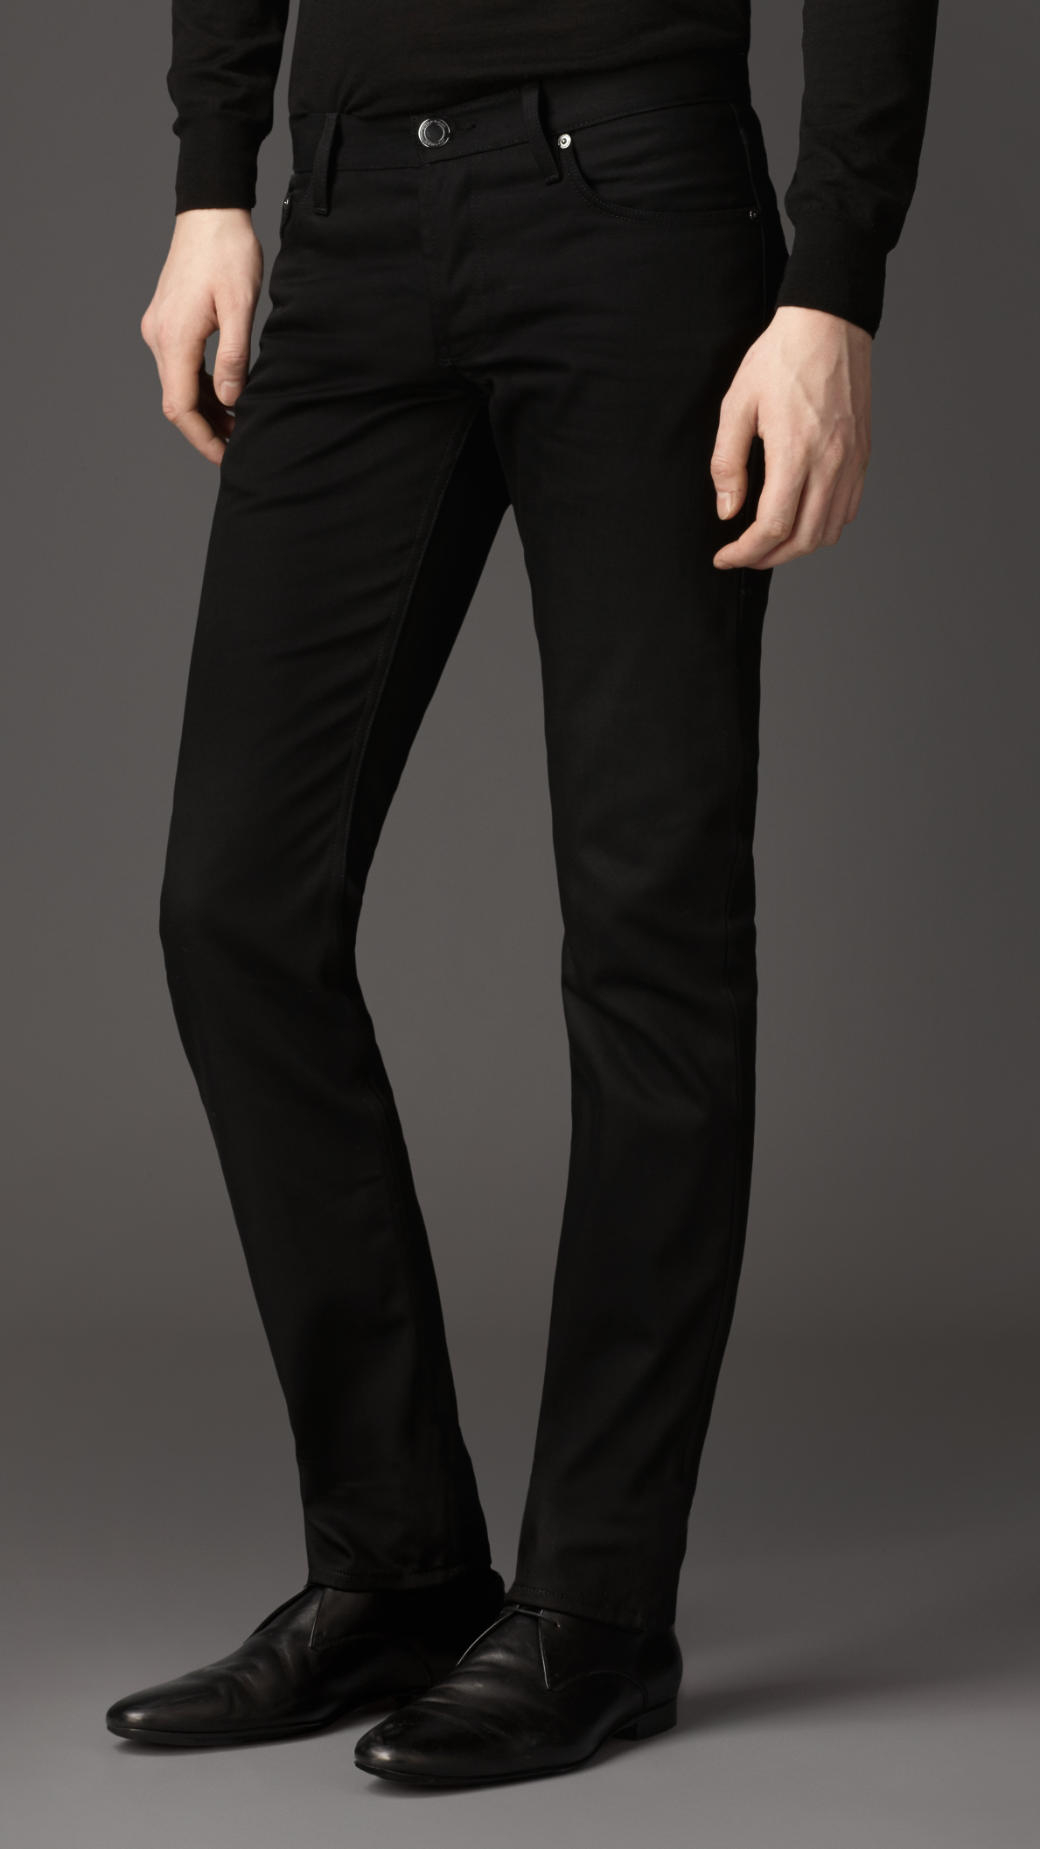 Burberry London Steadman black jeans. - munimoro.gob.pe